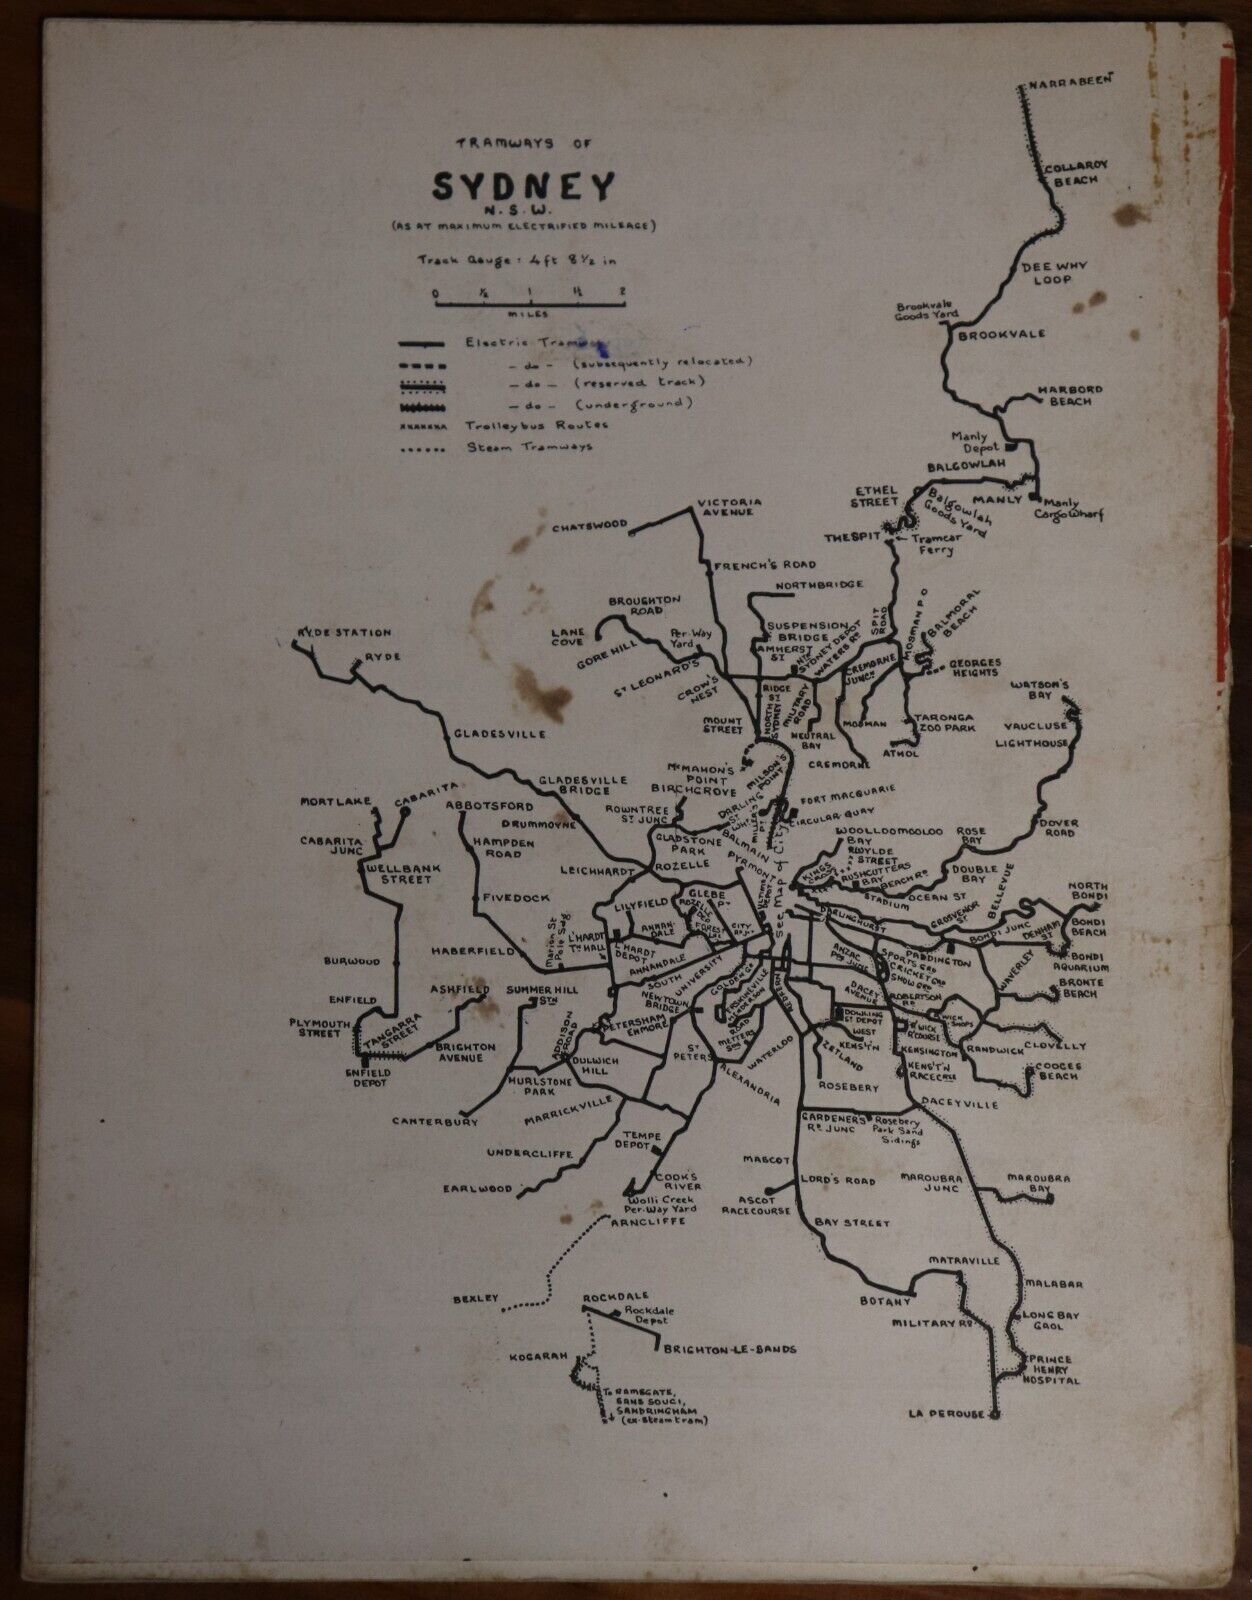 Destination Circular Quay - 1958 - Pictorial Review Of Sydney Tramcars Book